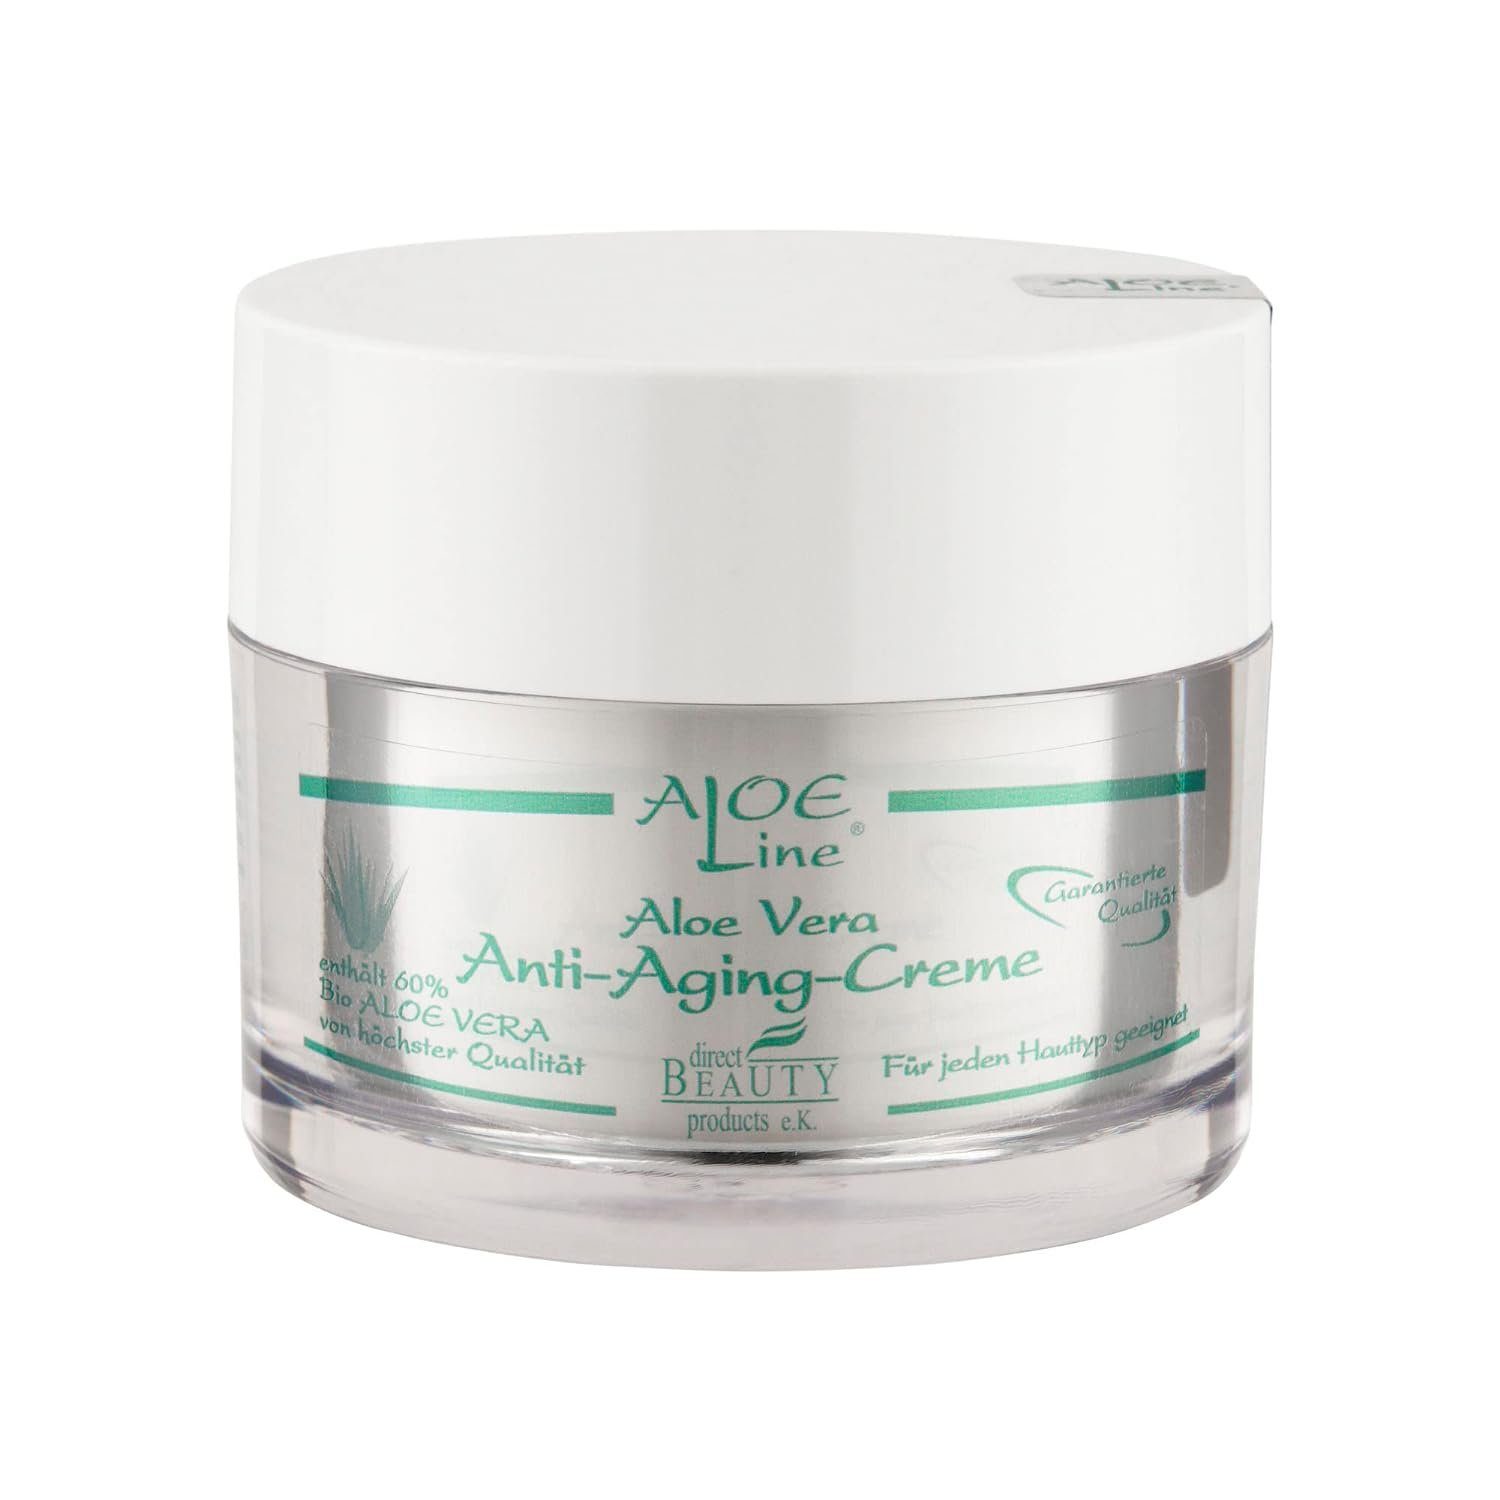 ALOE Line Anti-Aging-Creme Aloe Vera 24h Anti Aging Gesichtscreme mit 60% Bio Aloe Vera, 50ml